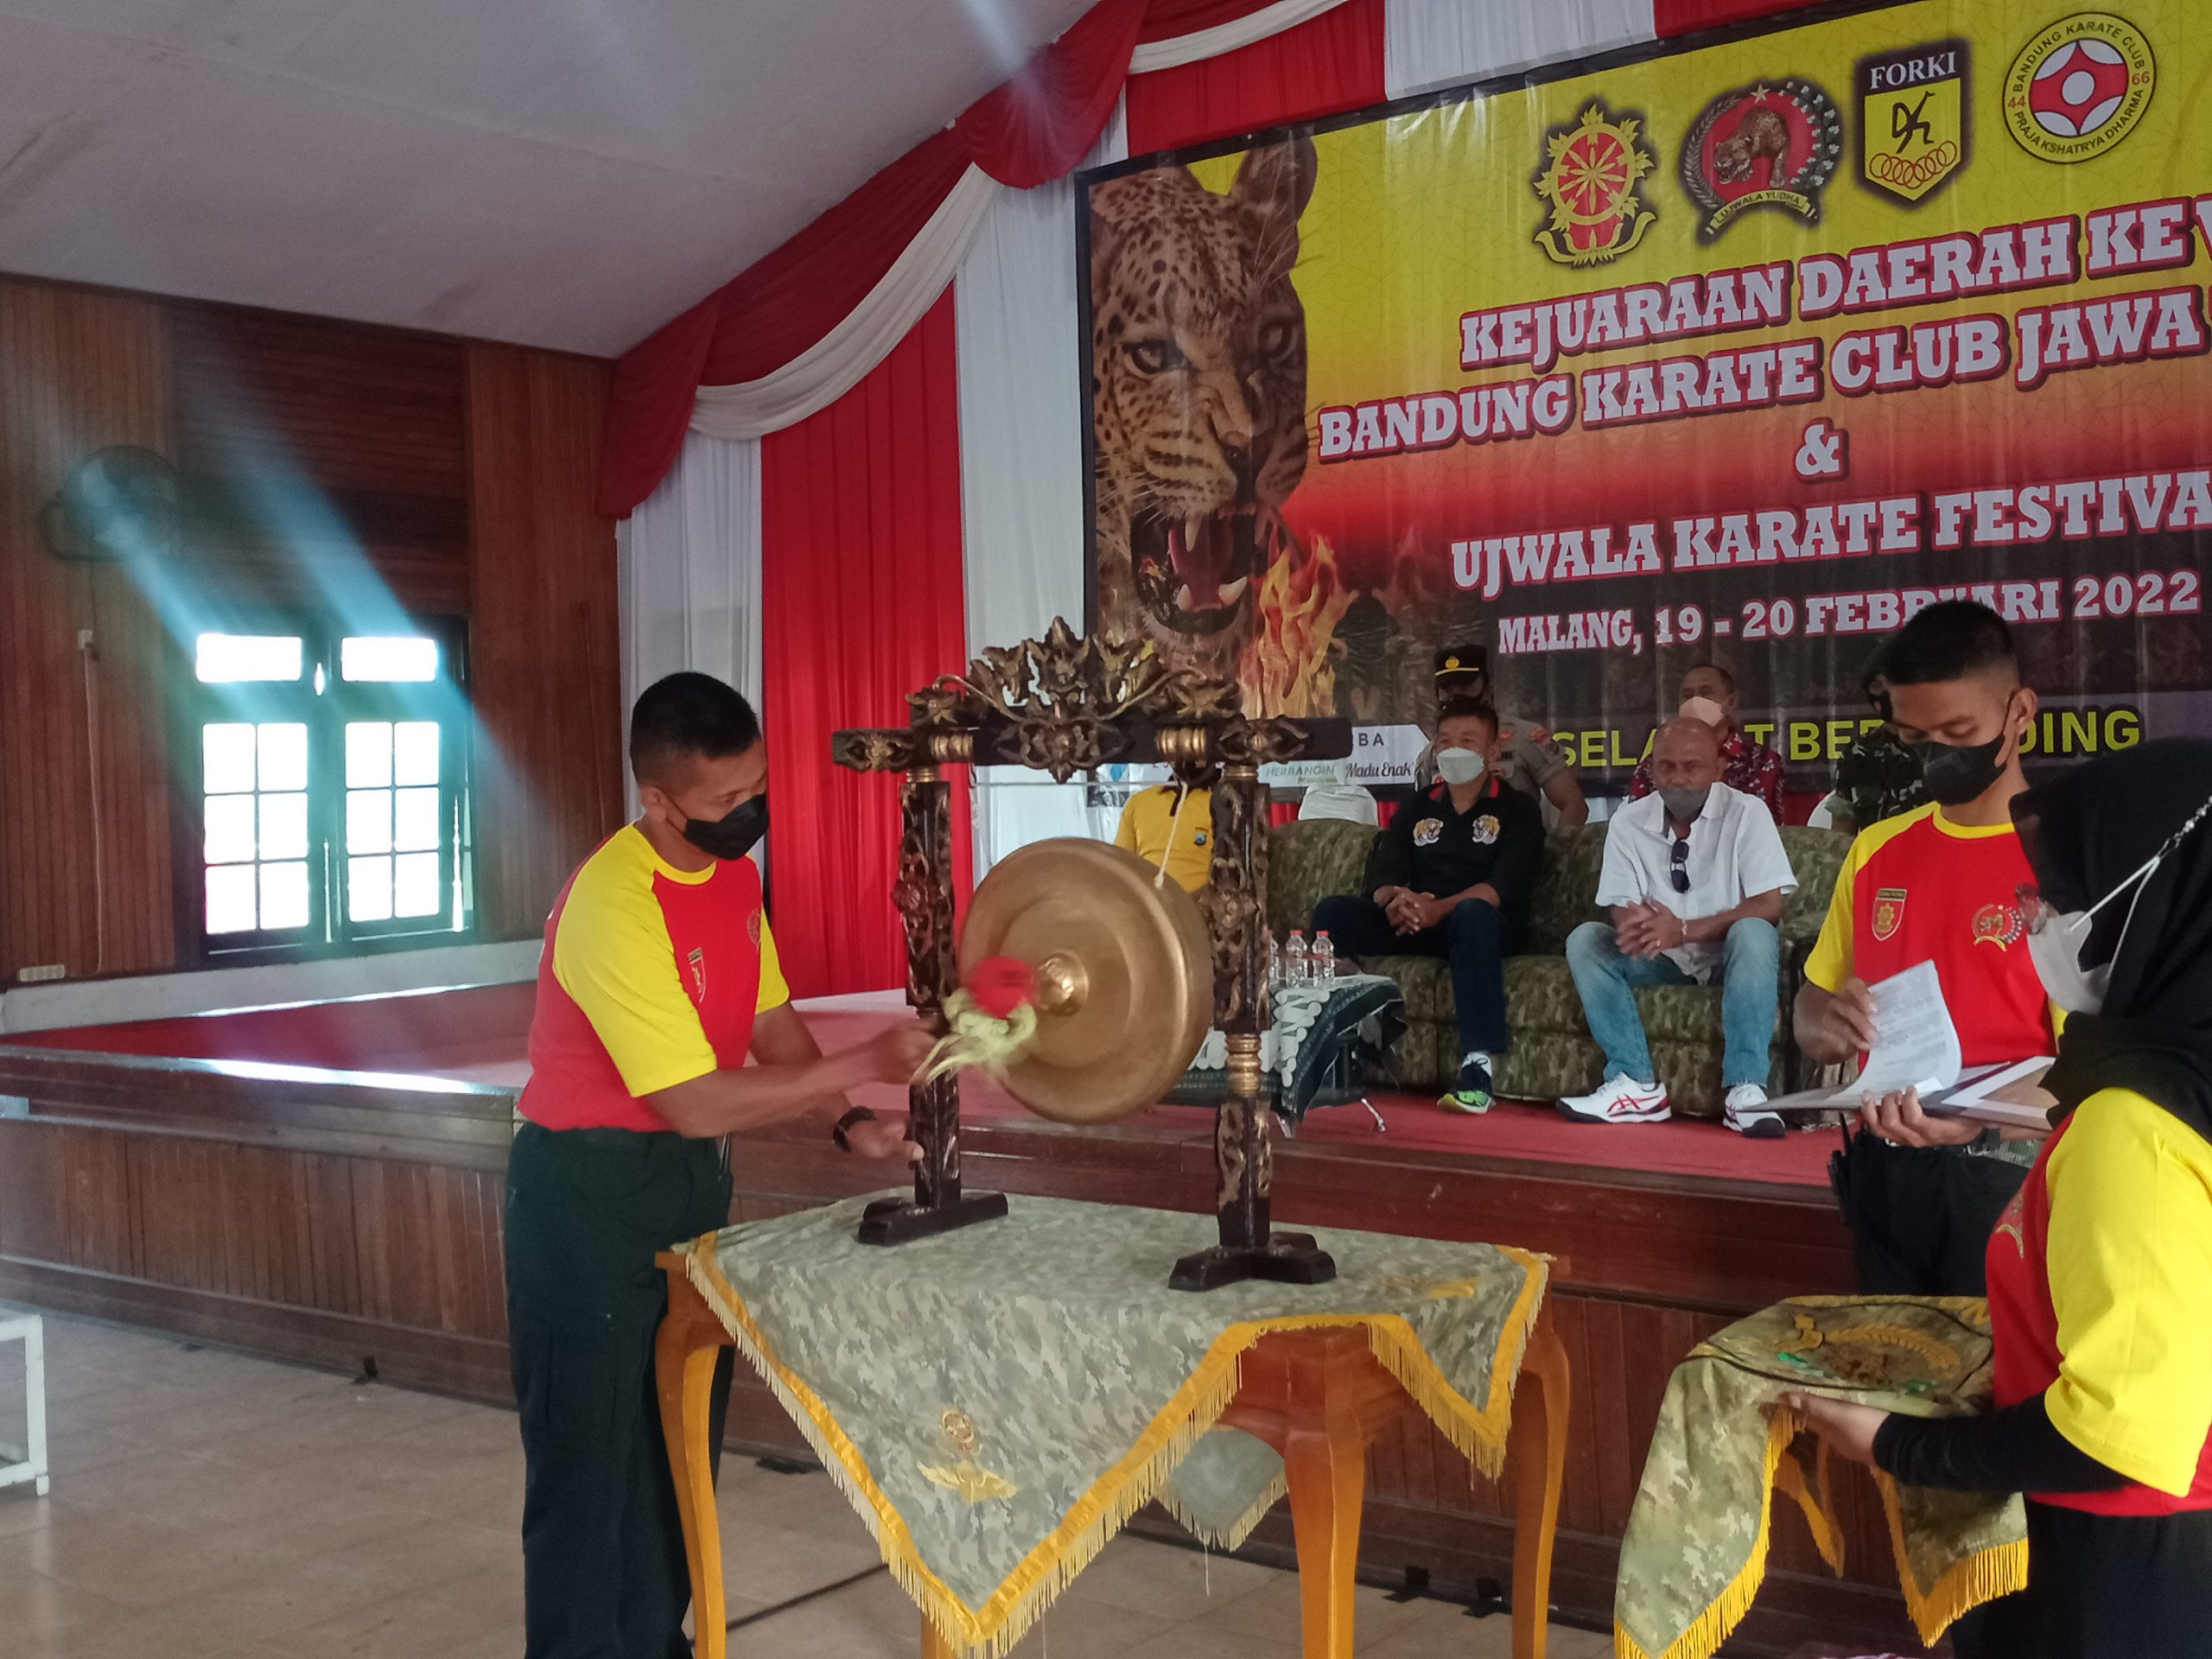 Ujwala Karate Festival Diikuti Ribuan Atlet dari Seluruh Jatim